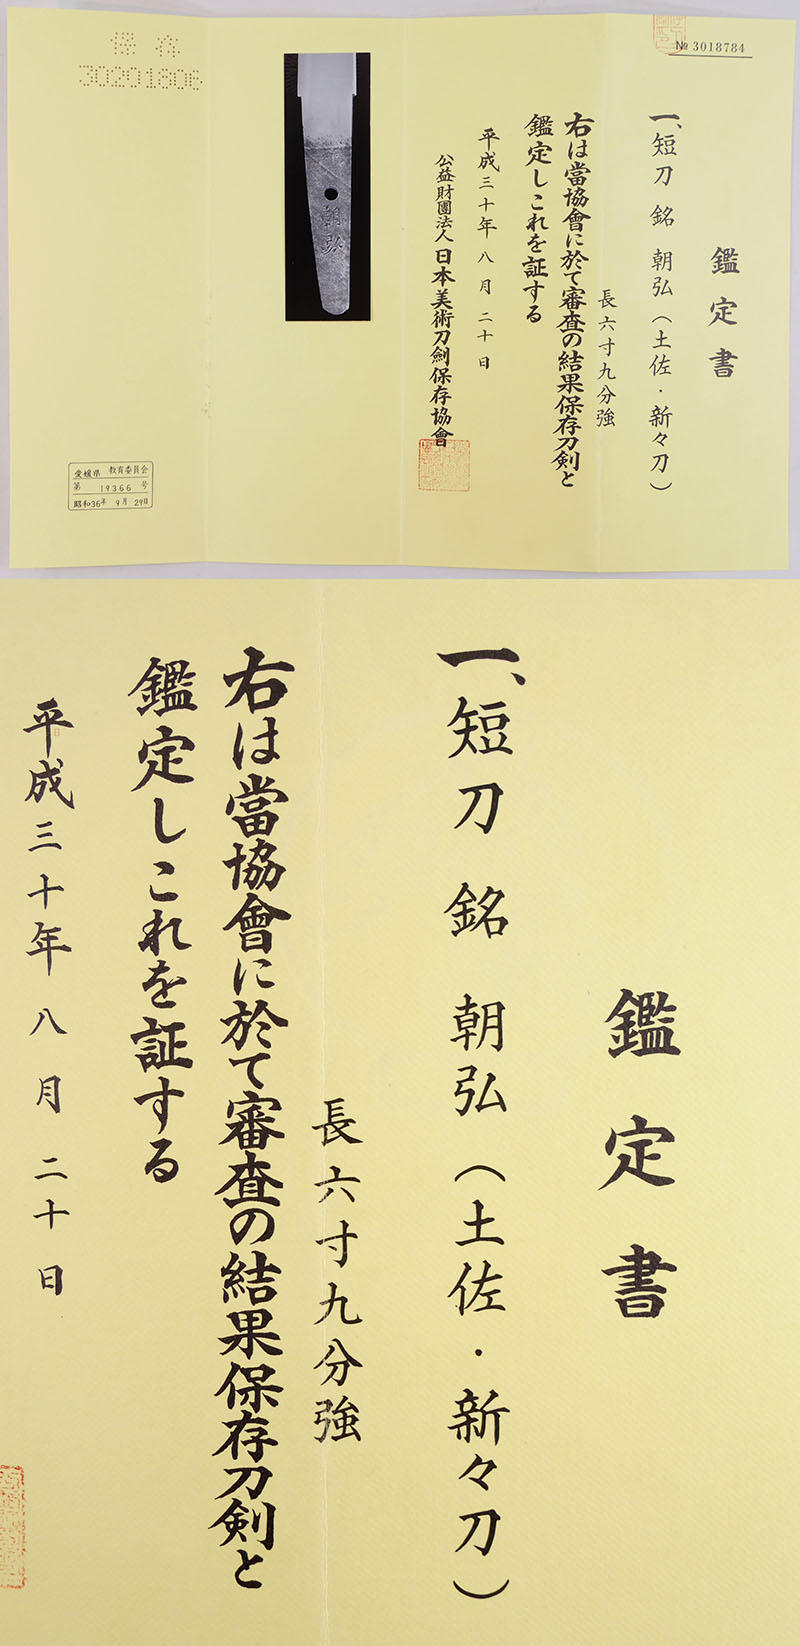 朝弘（南海太郎朝弘） Picture of Certificate